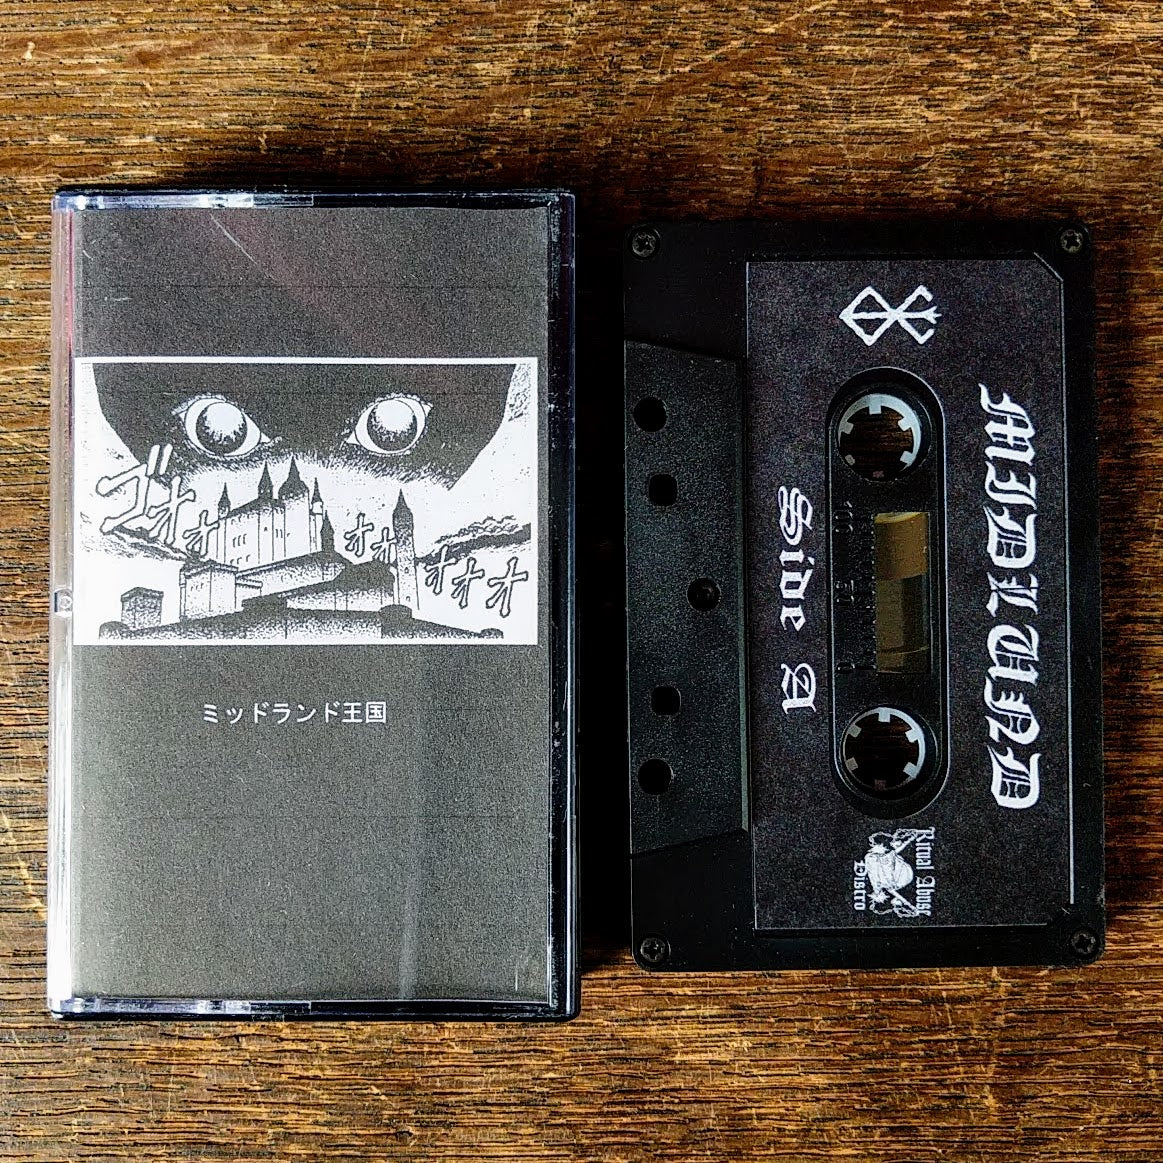 [SOLD OUT] MIDLUND "Midlund" Cassette Tape